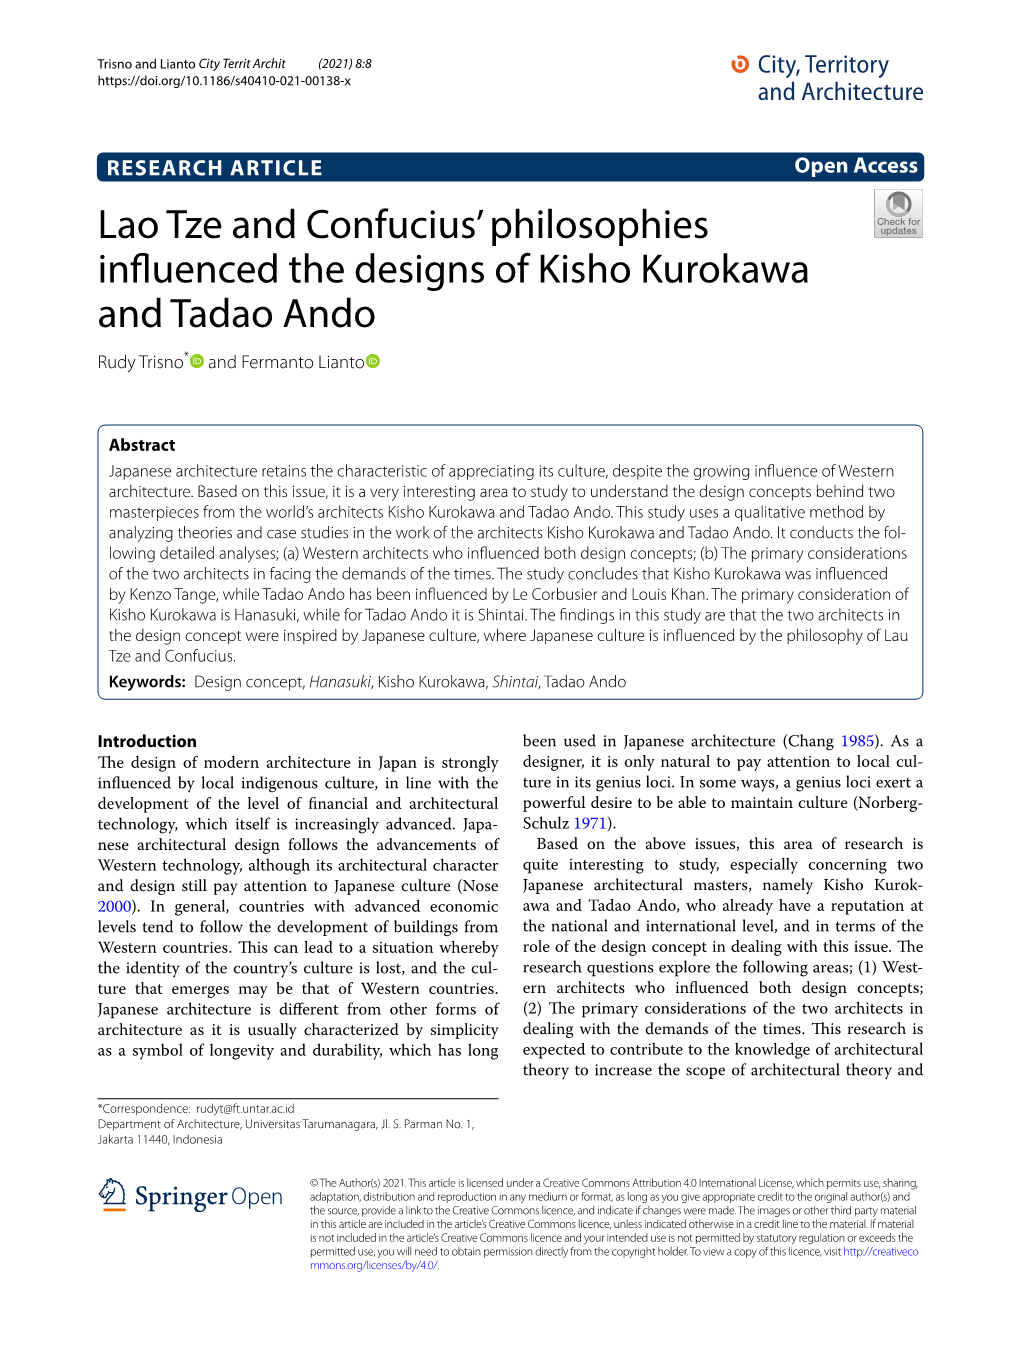 Lao Tze and Confucius' Philosophies Influenced the Designs of Kisho Kurokawa and Tadao Ando